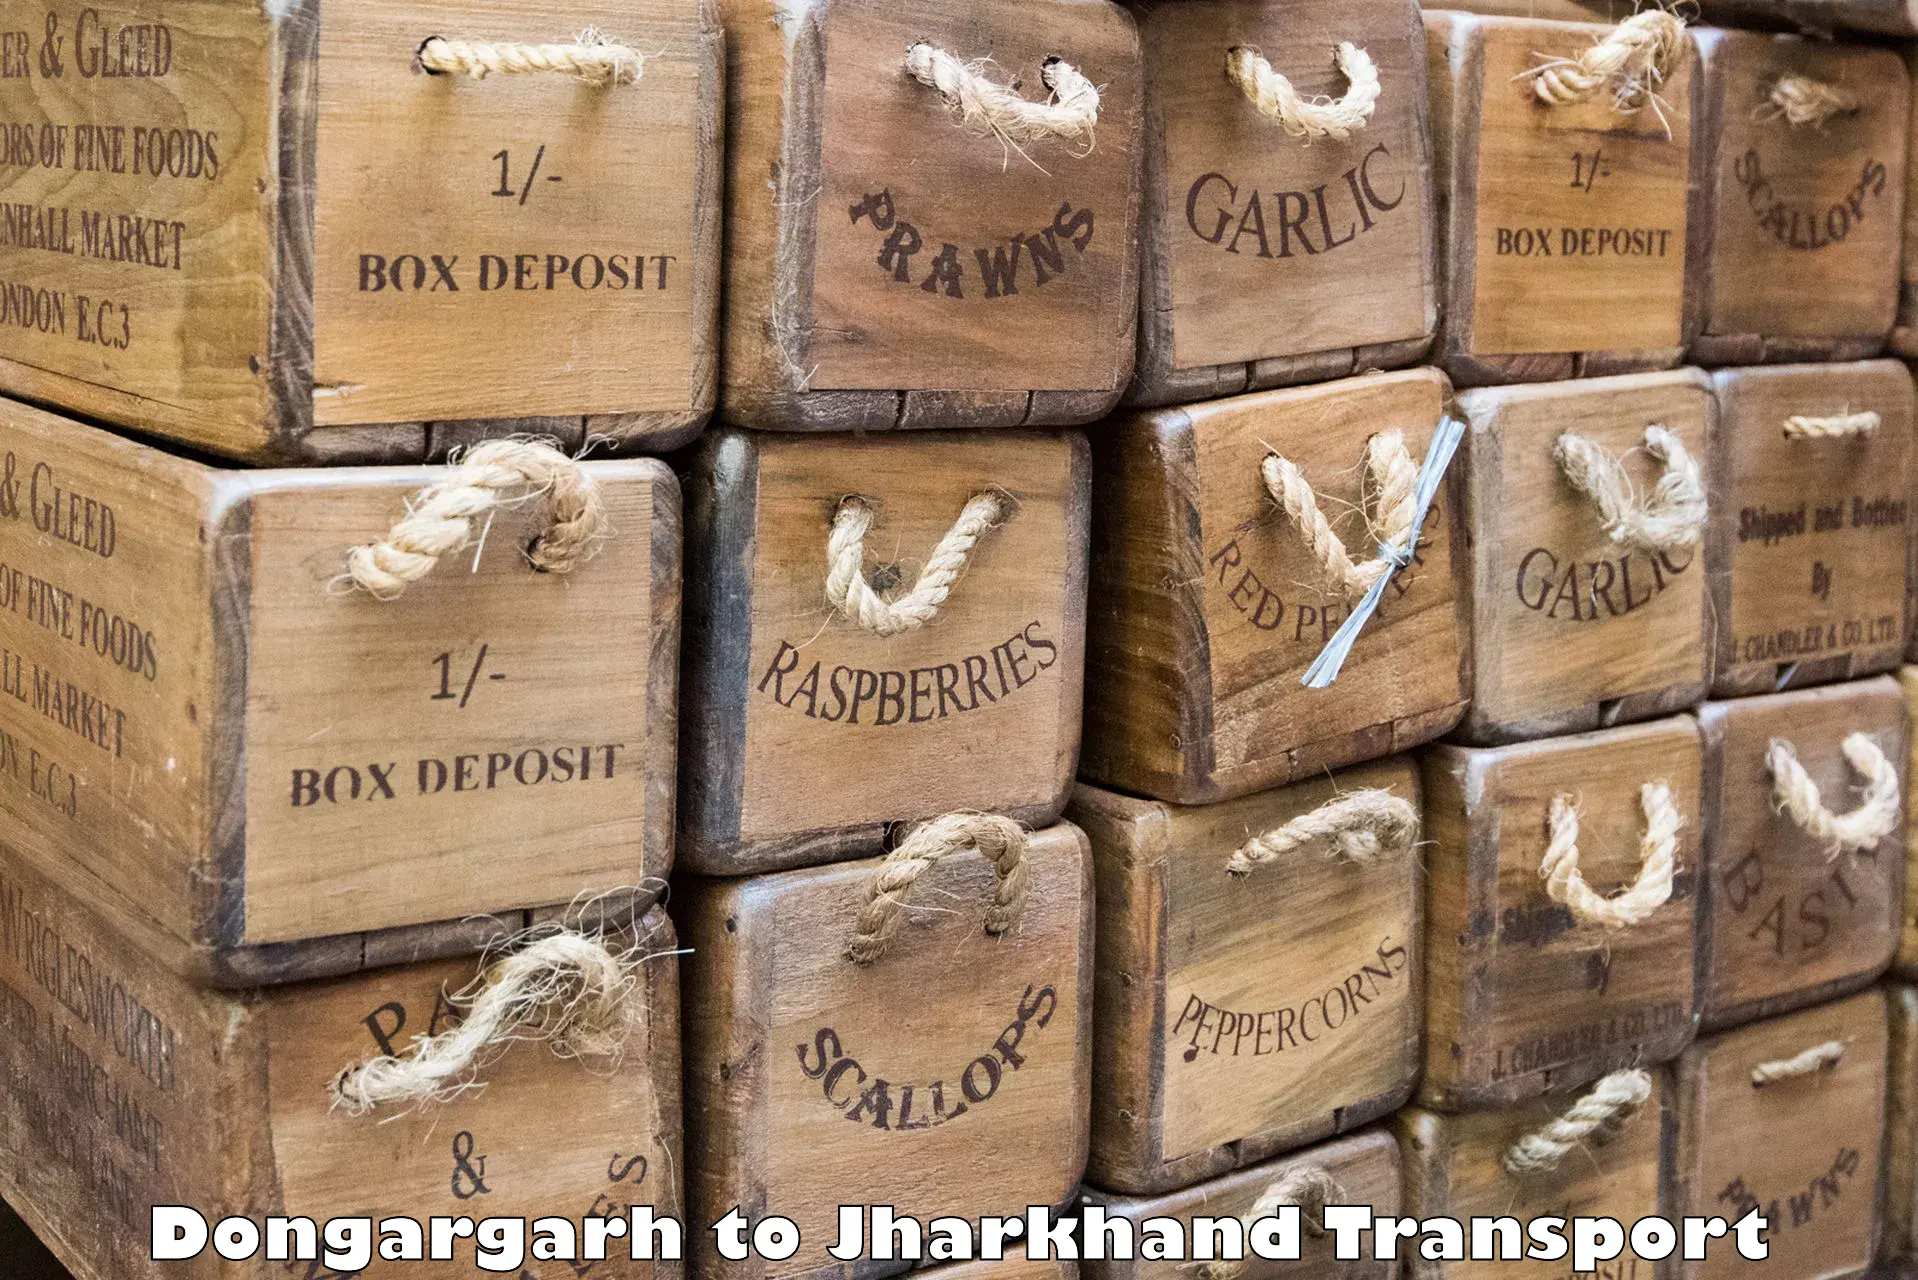 Delivery service Dongargarh to Medininagar